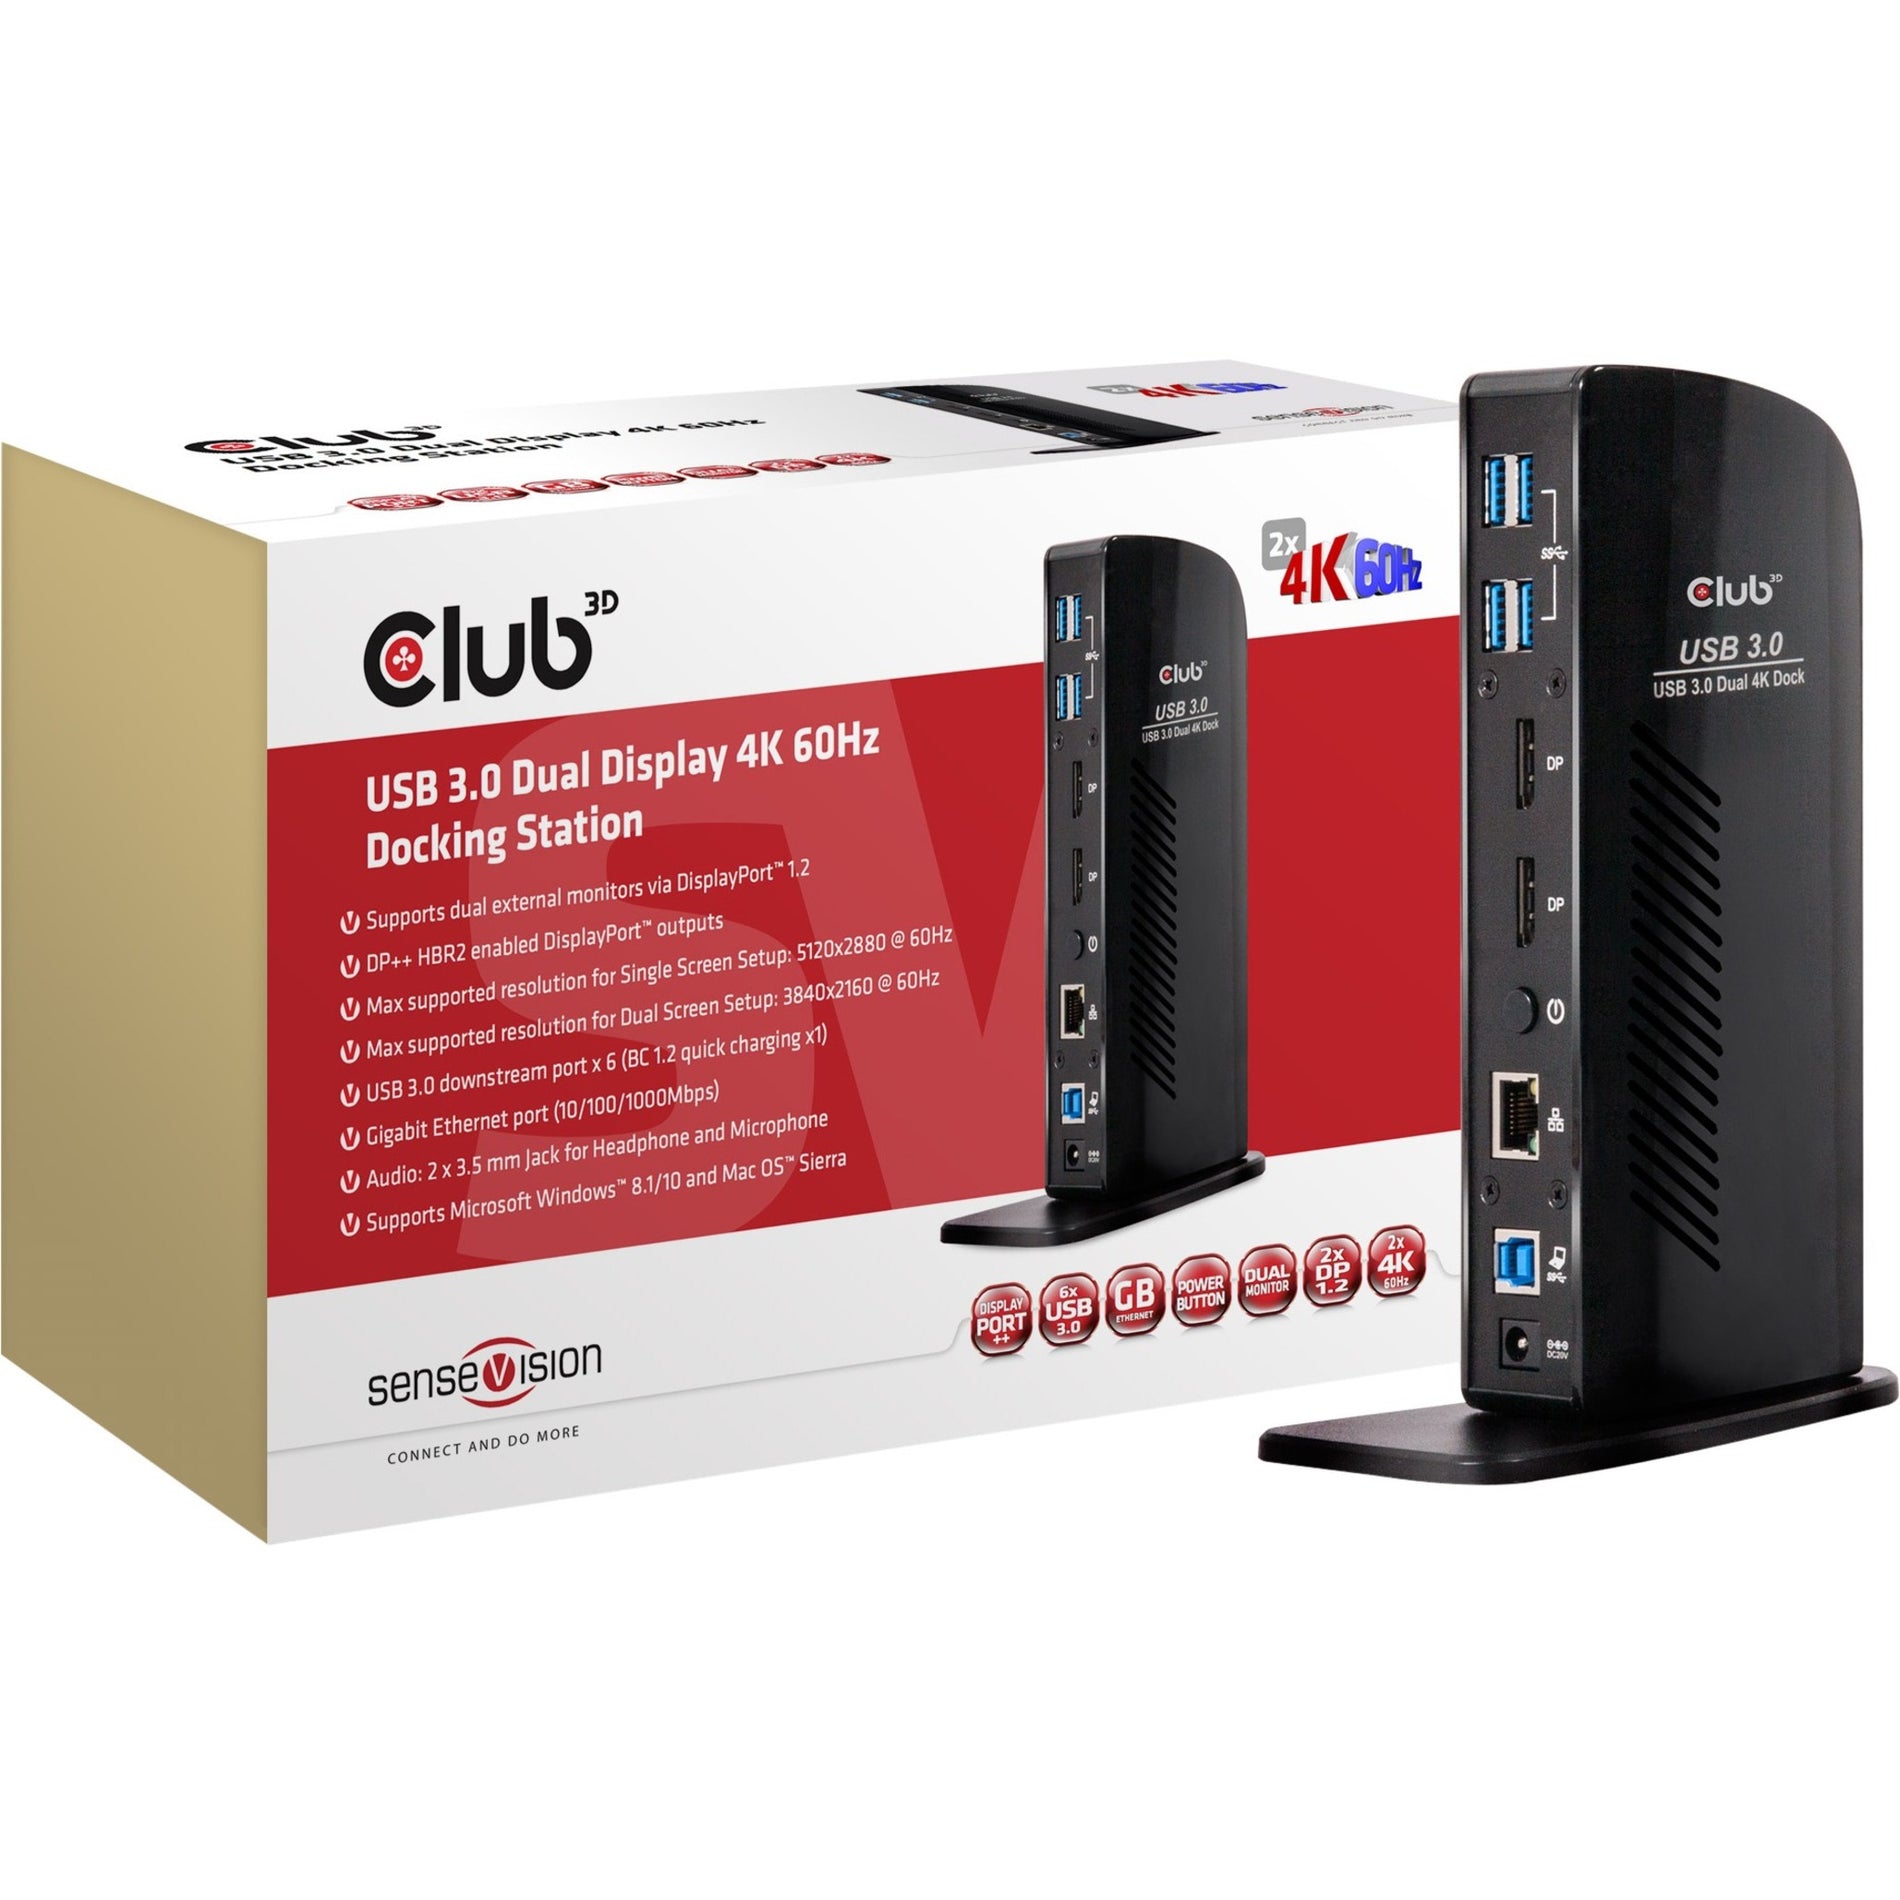 Club 3D CSV-1460 USB 3.0 Dual Display 4K 60Hz Docking Station, 7 USB Ports, RJ-45 Network